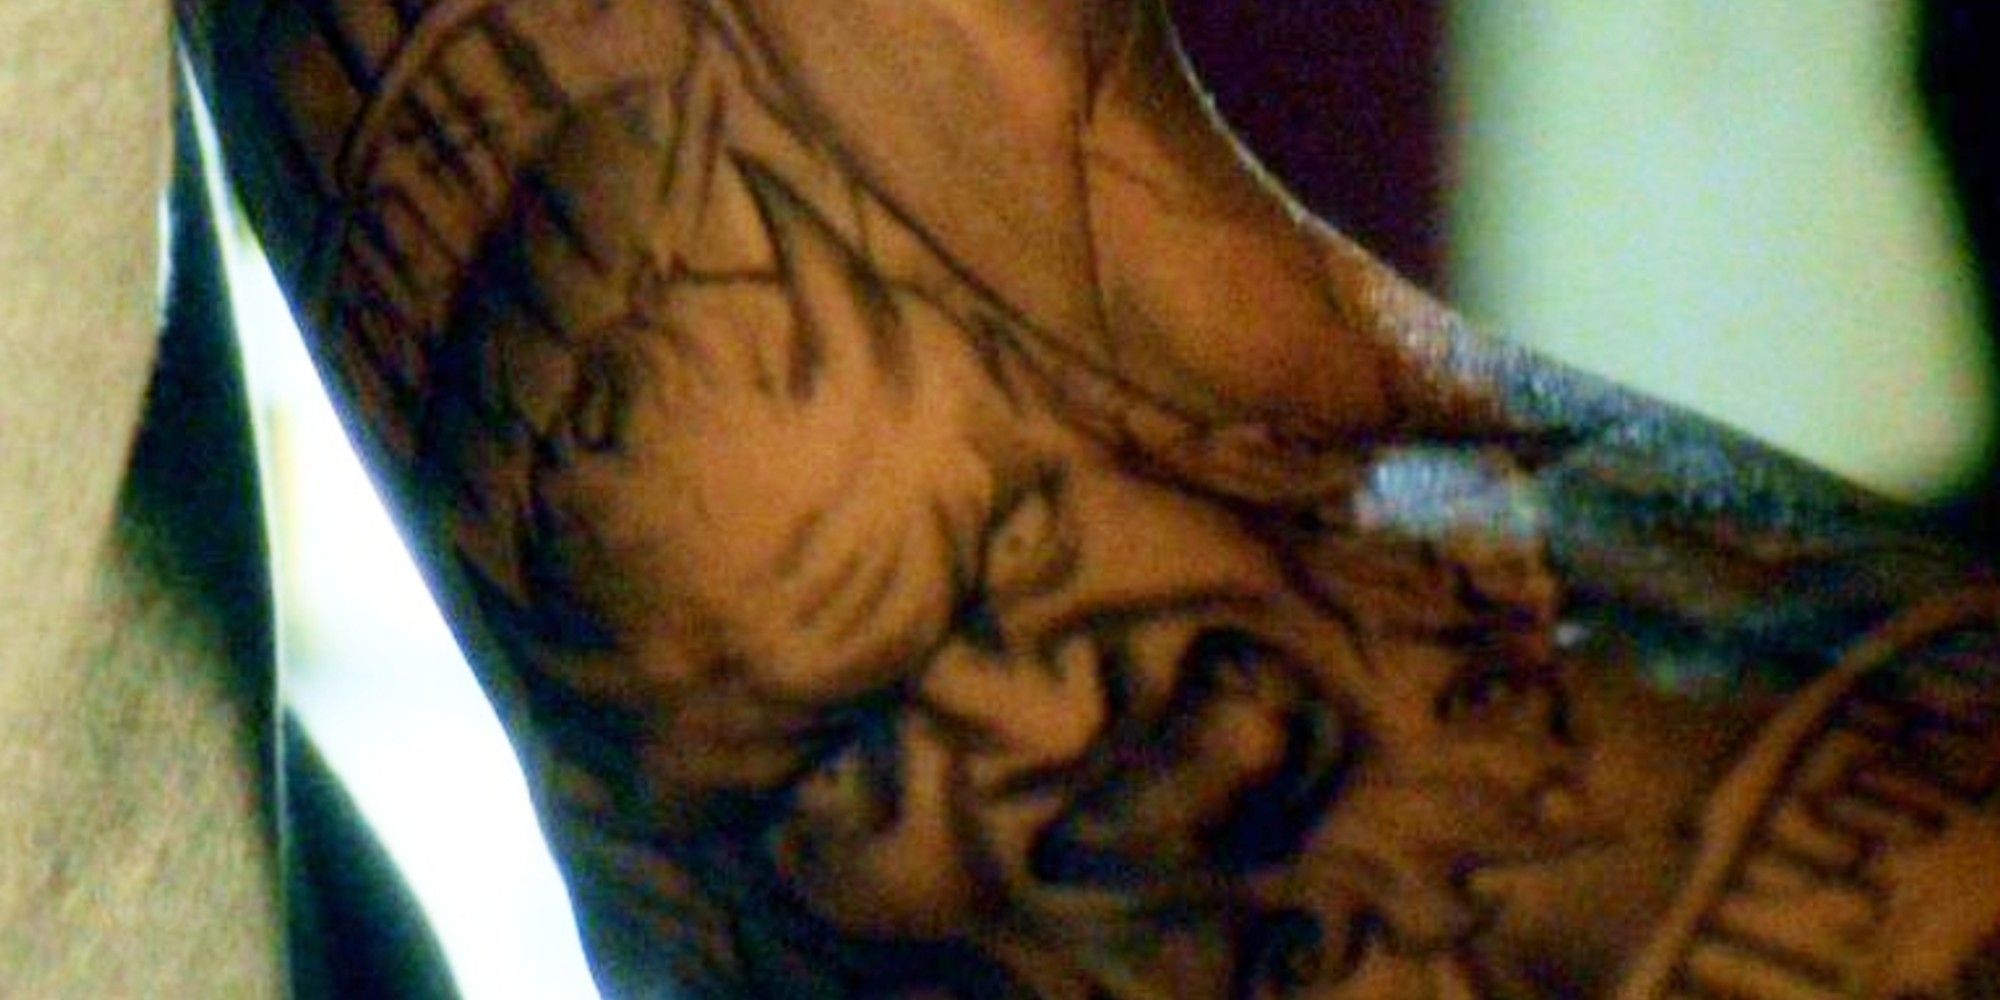 prison break Michael Scofield / Wentworth Miller tattoo Geekiness | tattoos  picture prison break… | Tatuagem de arcanjo, Ideias de tatuagens, Tatuagem prison  break